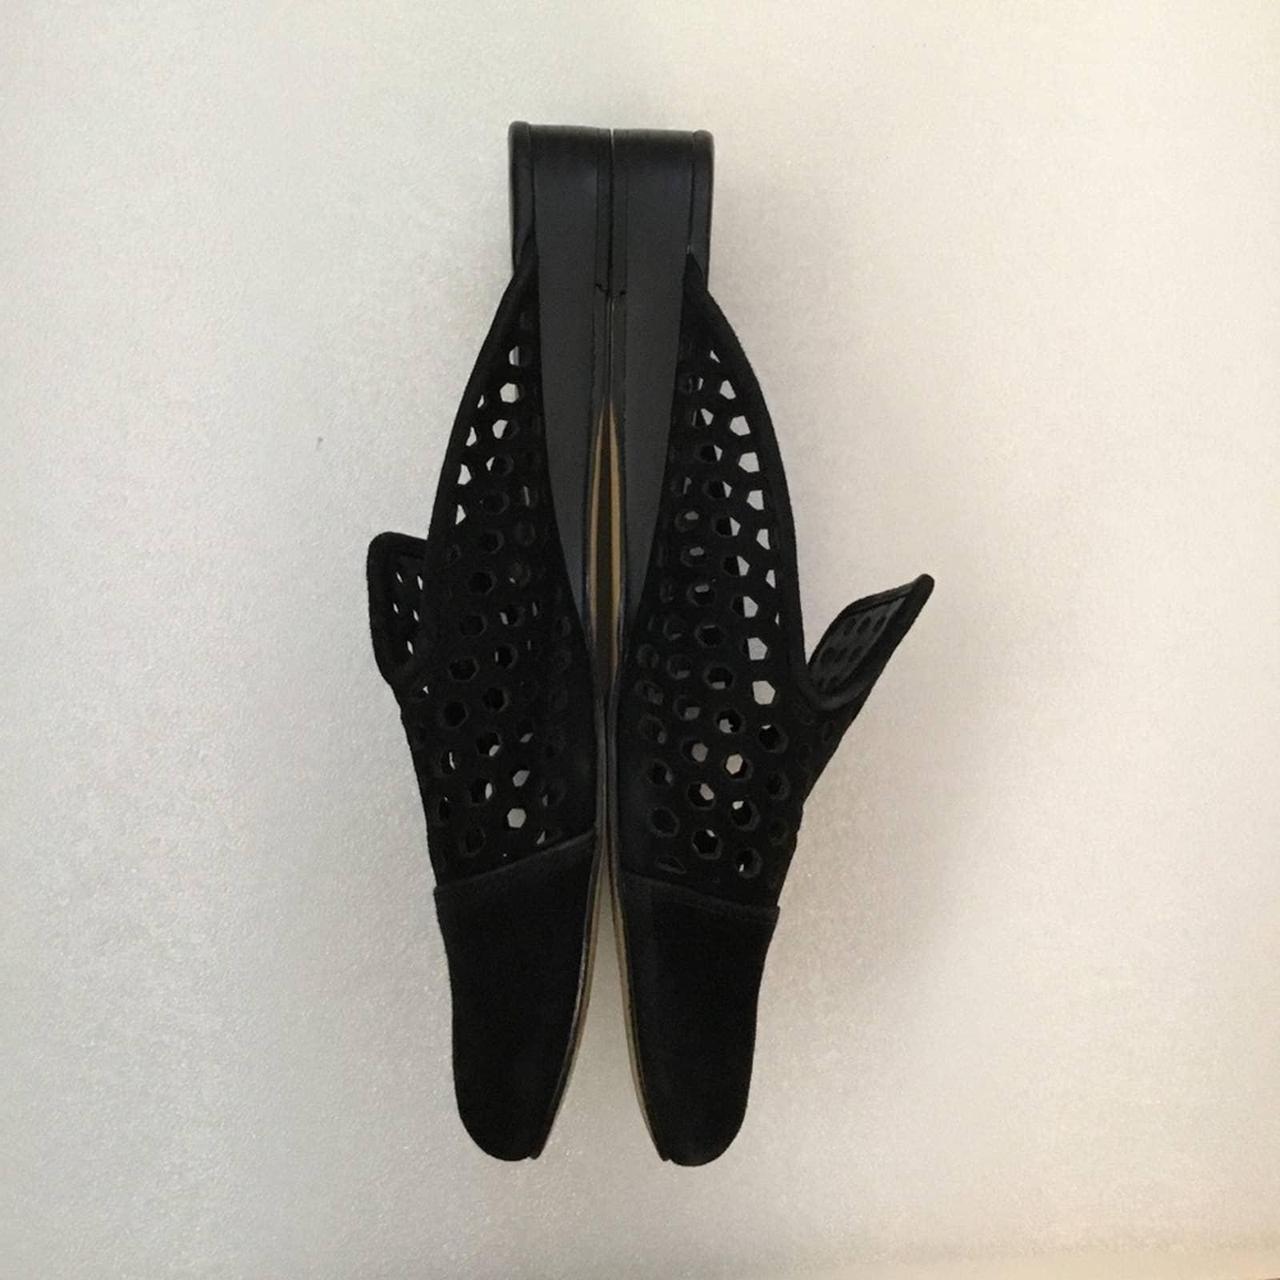 Saks Fifth Avenue Shoes Womens Black Slip On - Depop